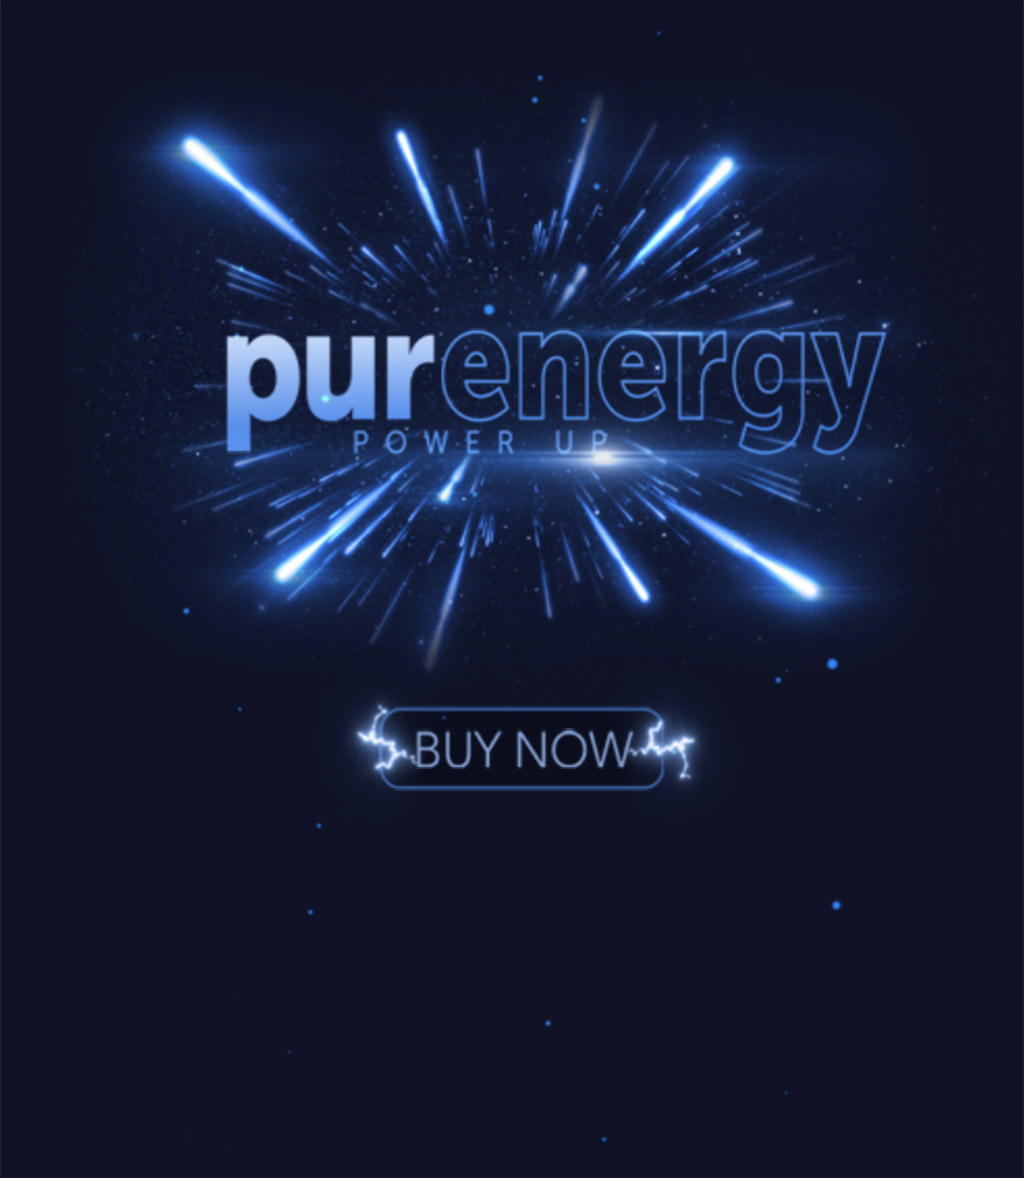 Purenergy